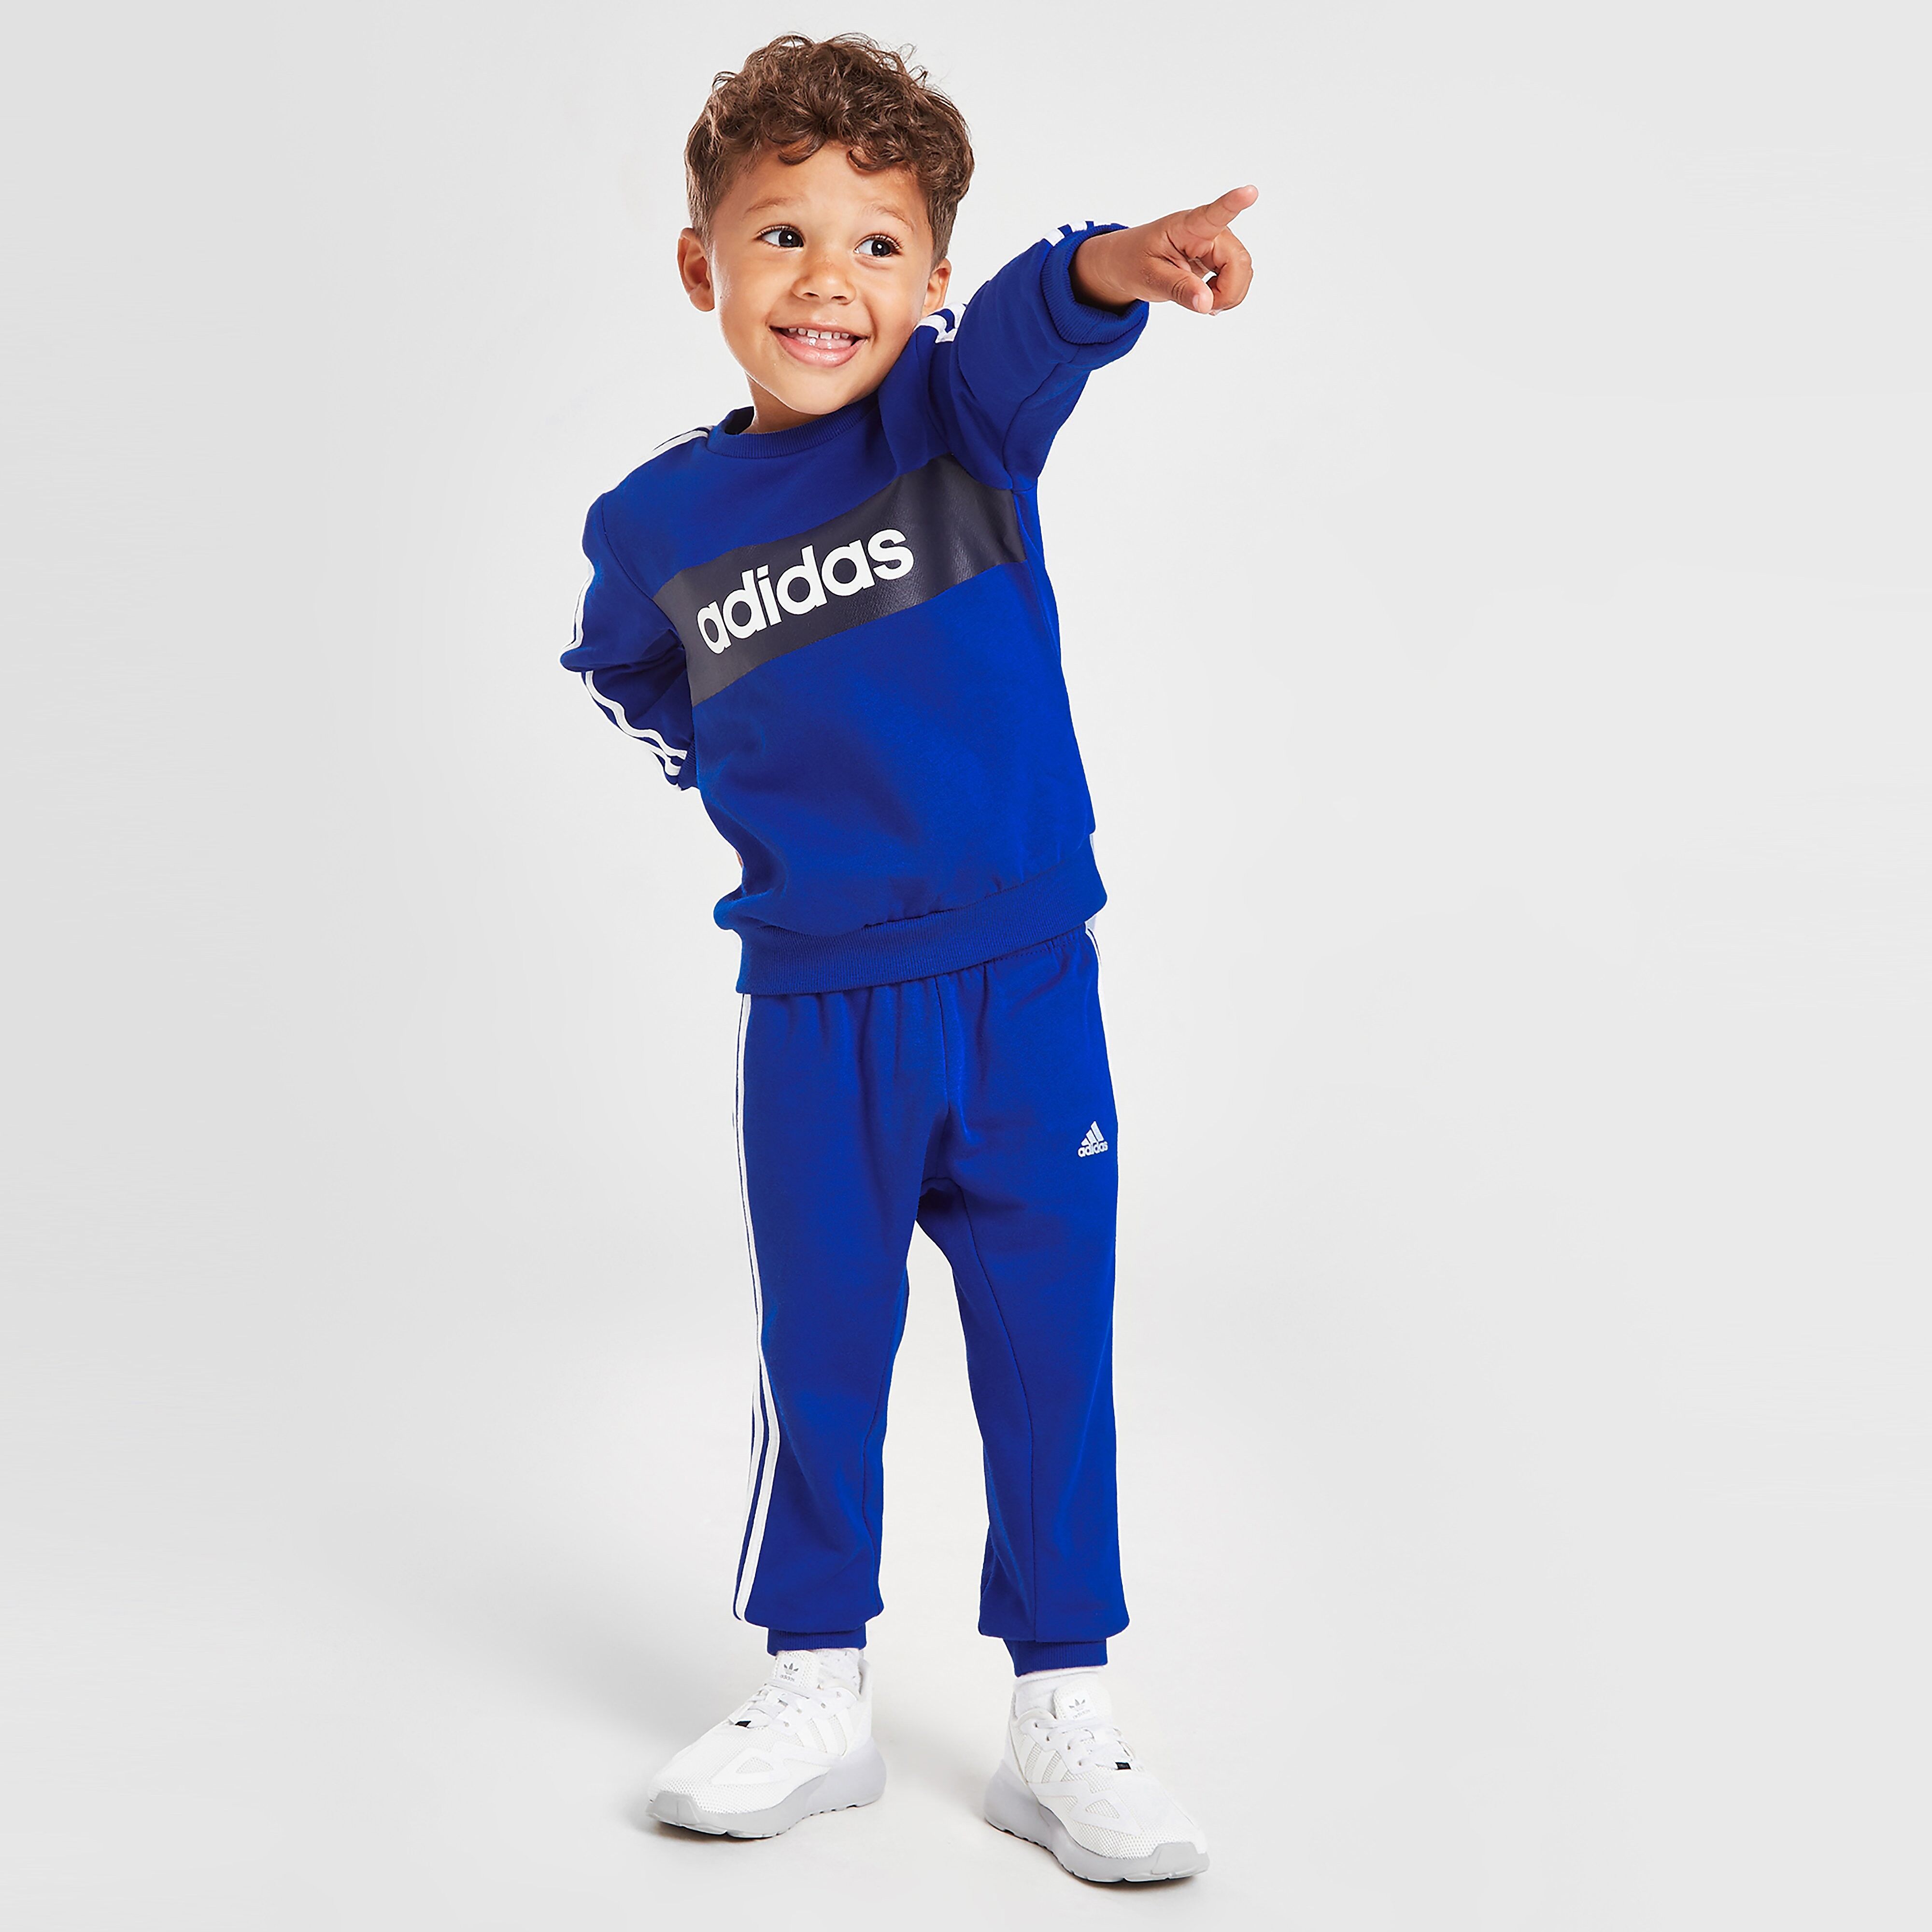 adidas Inf B Crew Set Bos Nvy/wht/blu $ - Blue - Kids  size: 12-18M